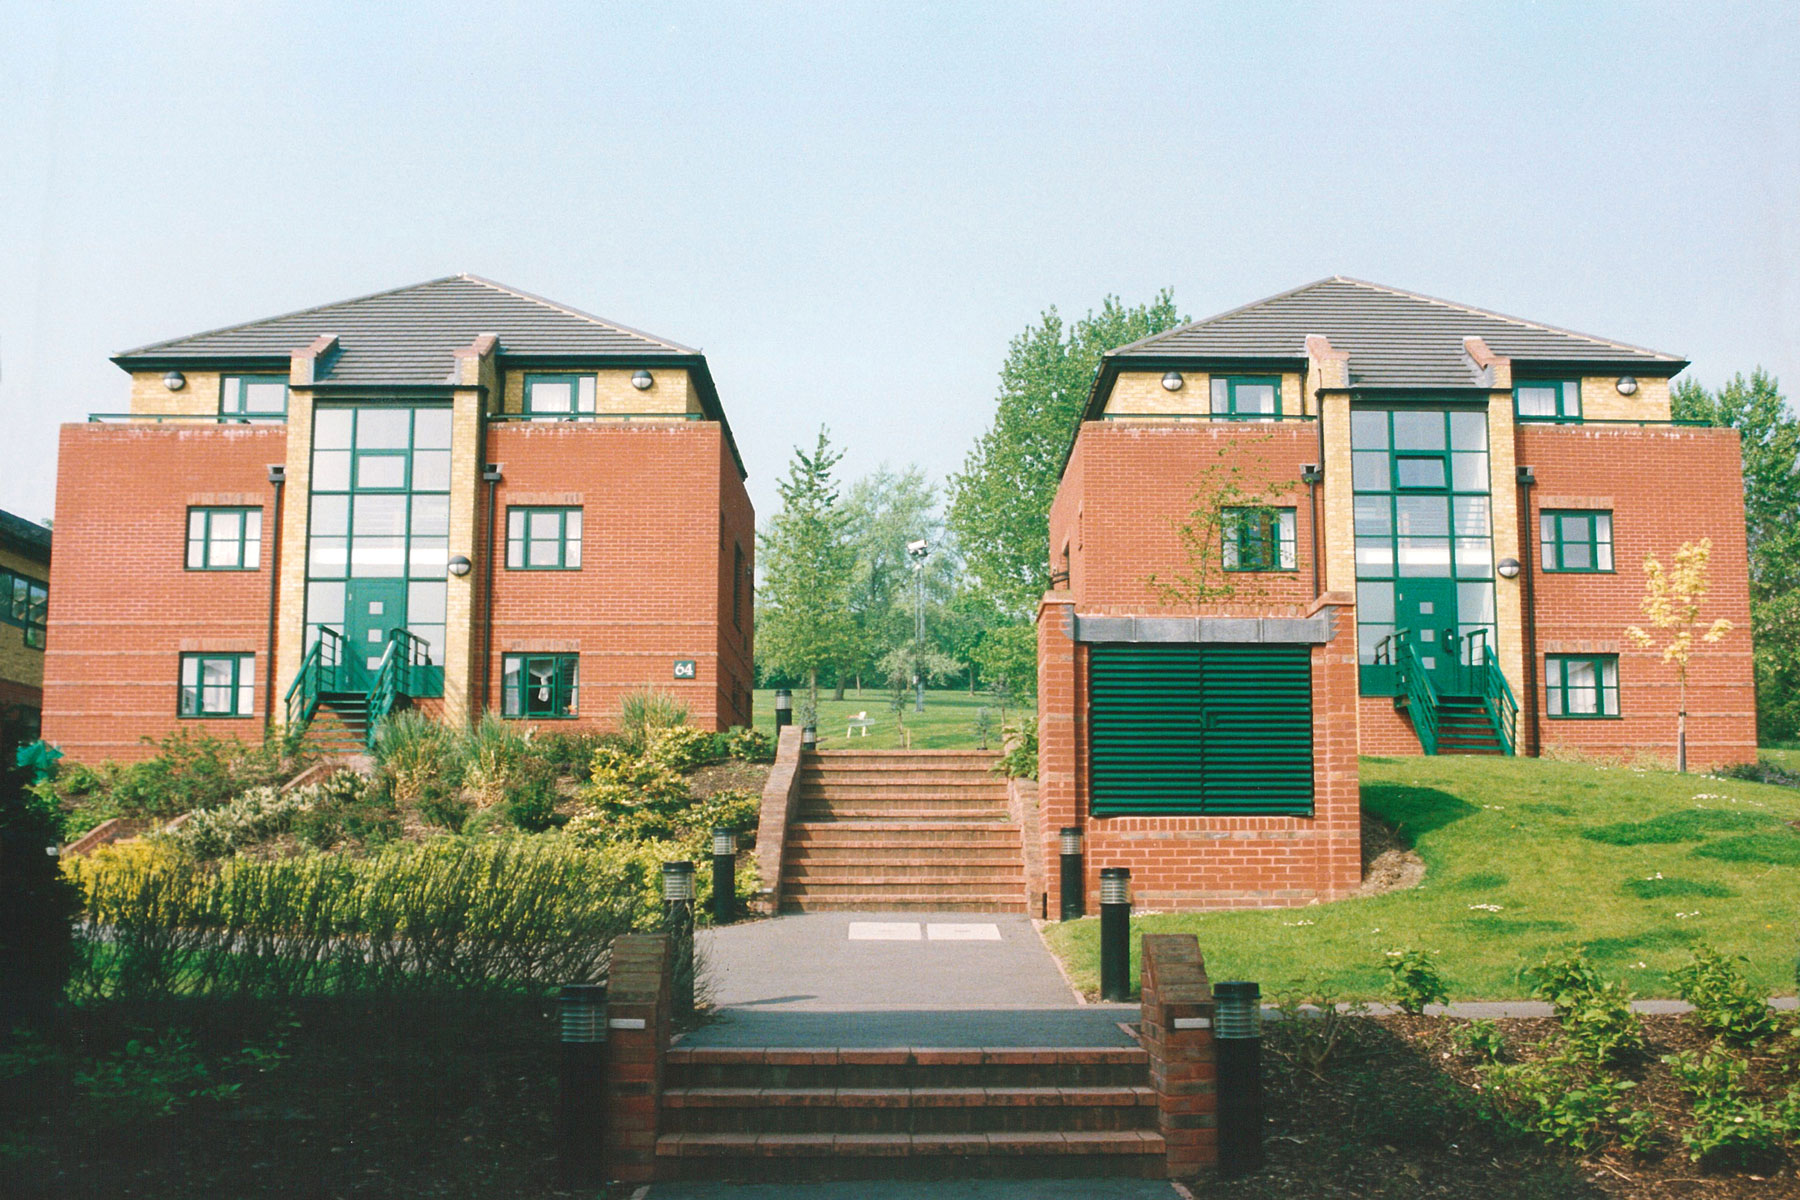 The University of Surrey - Brickfield Court Student Housing